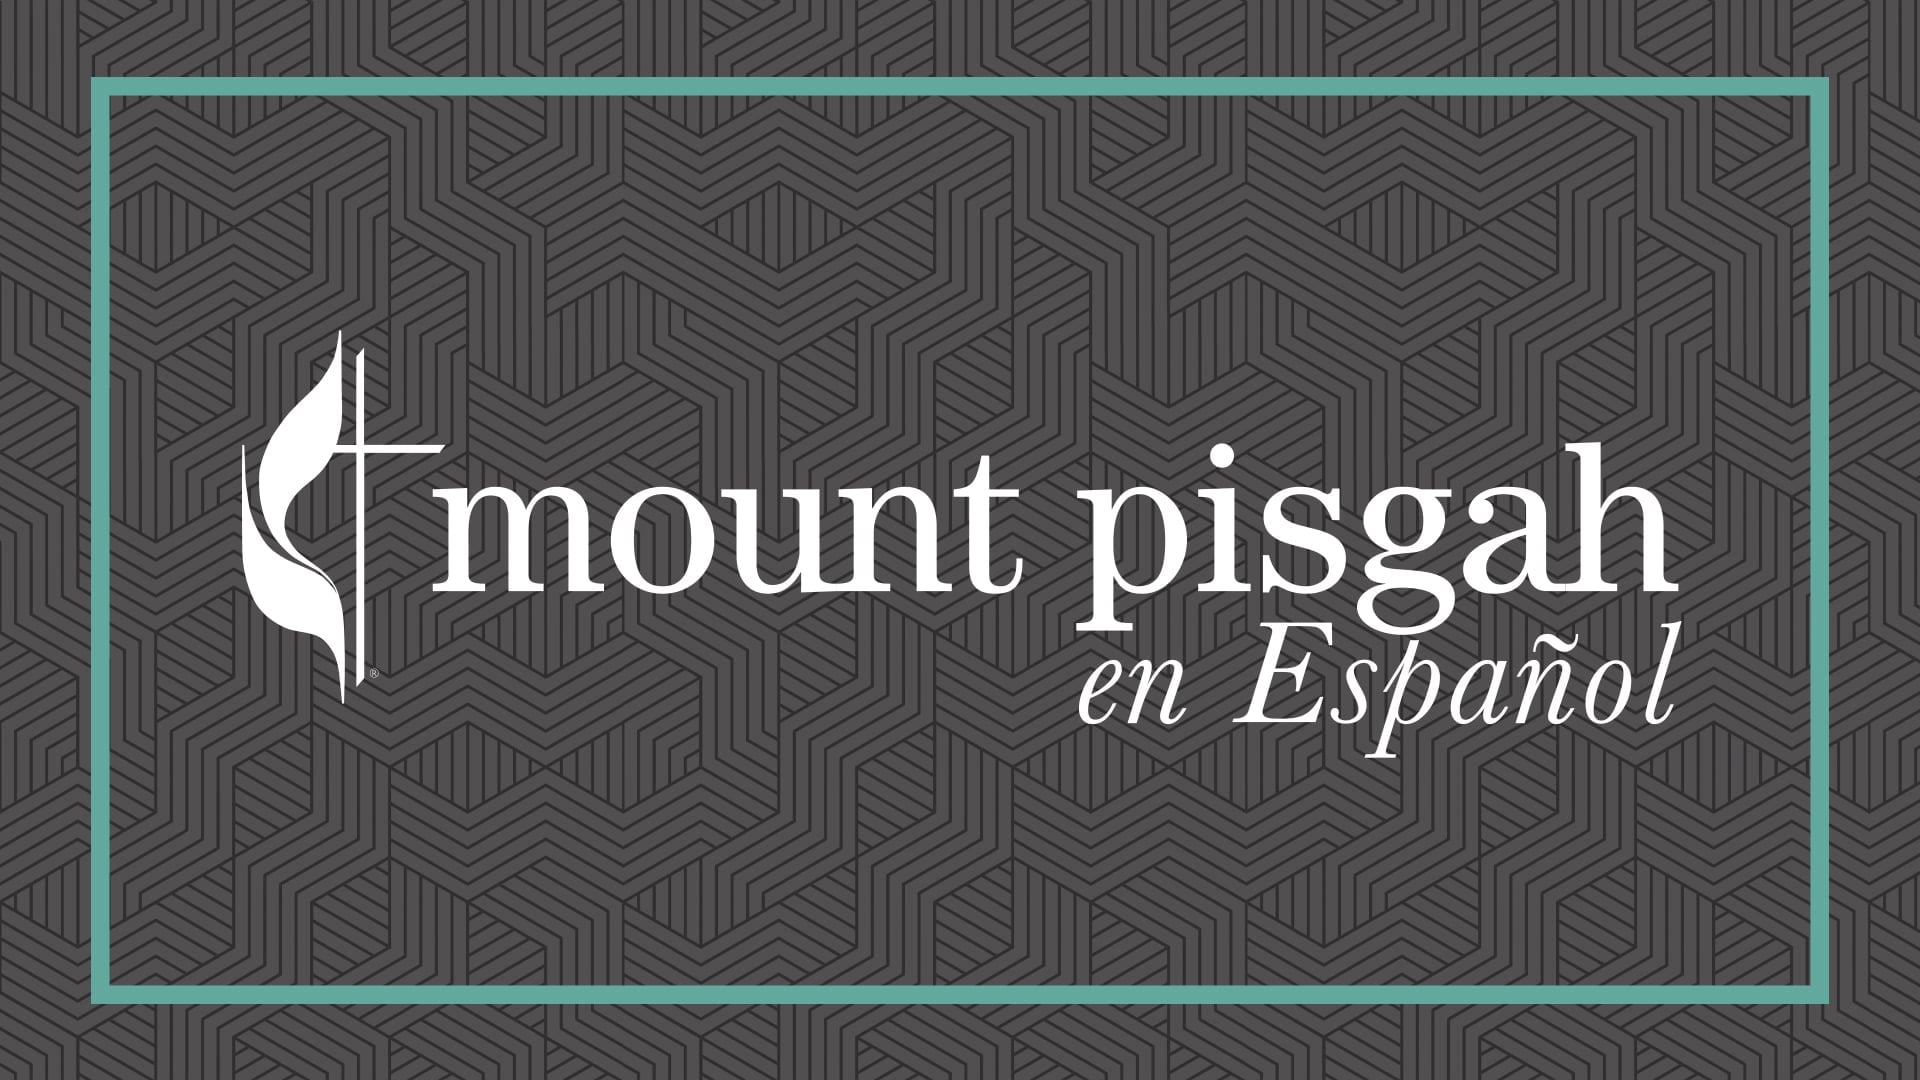 9/12/2021 | Mount Pisgah en Español